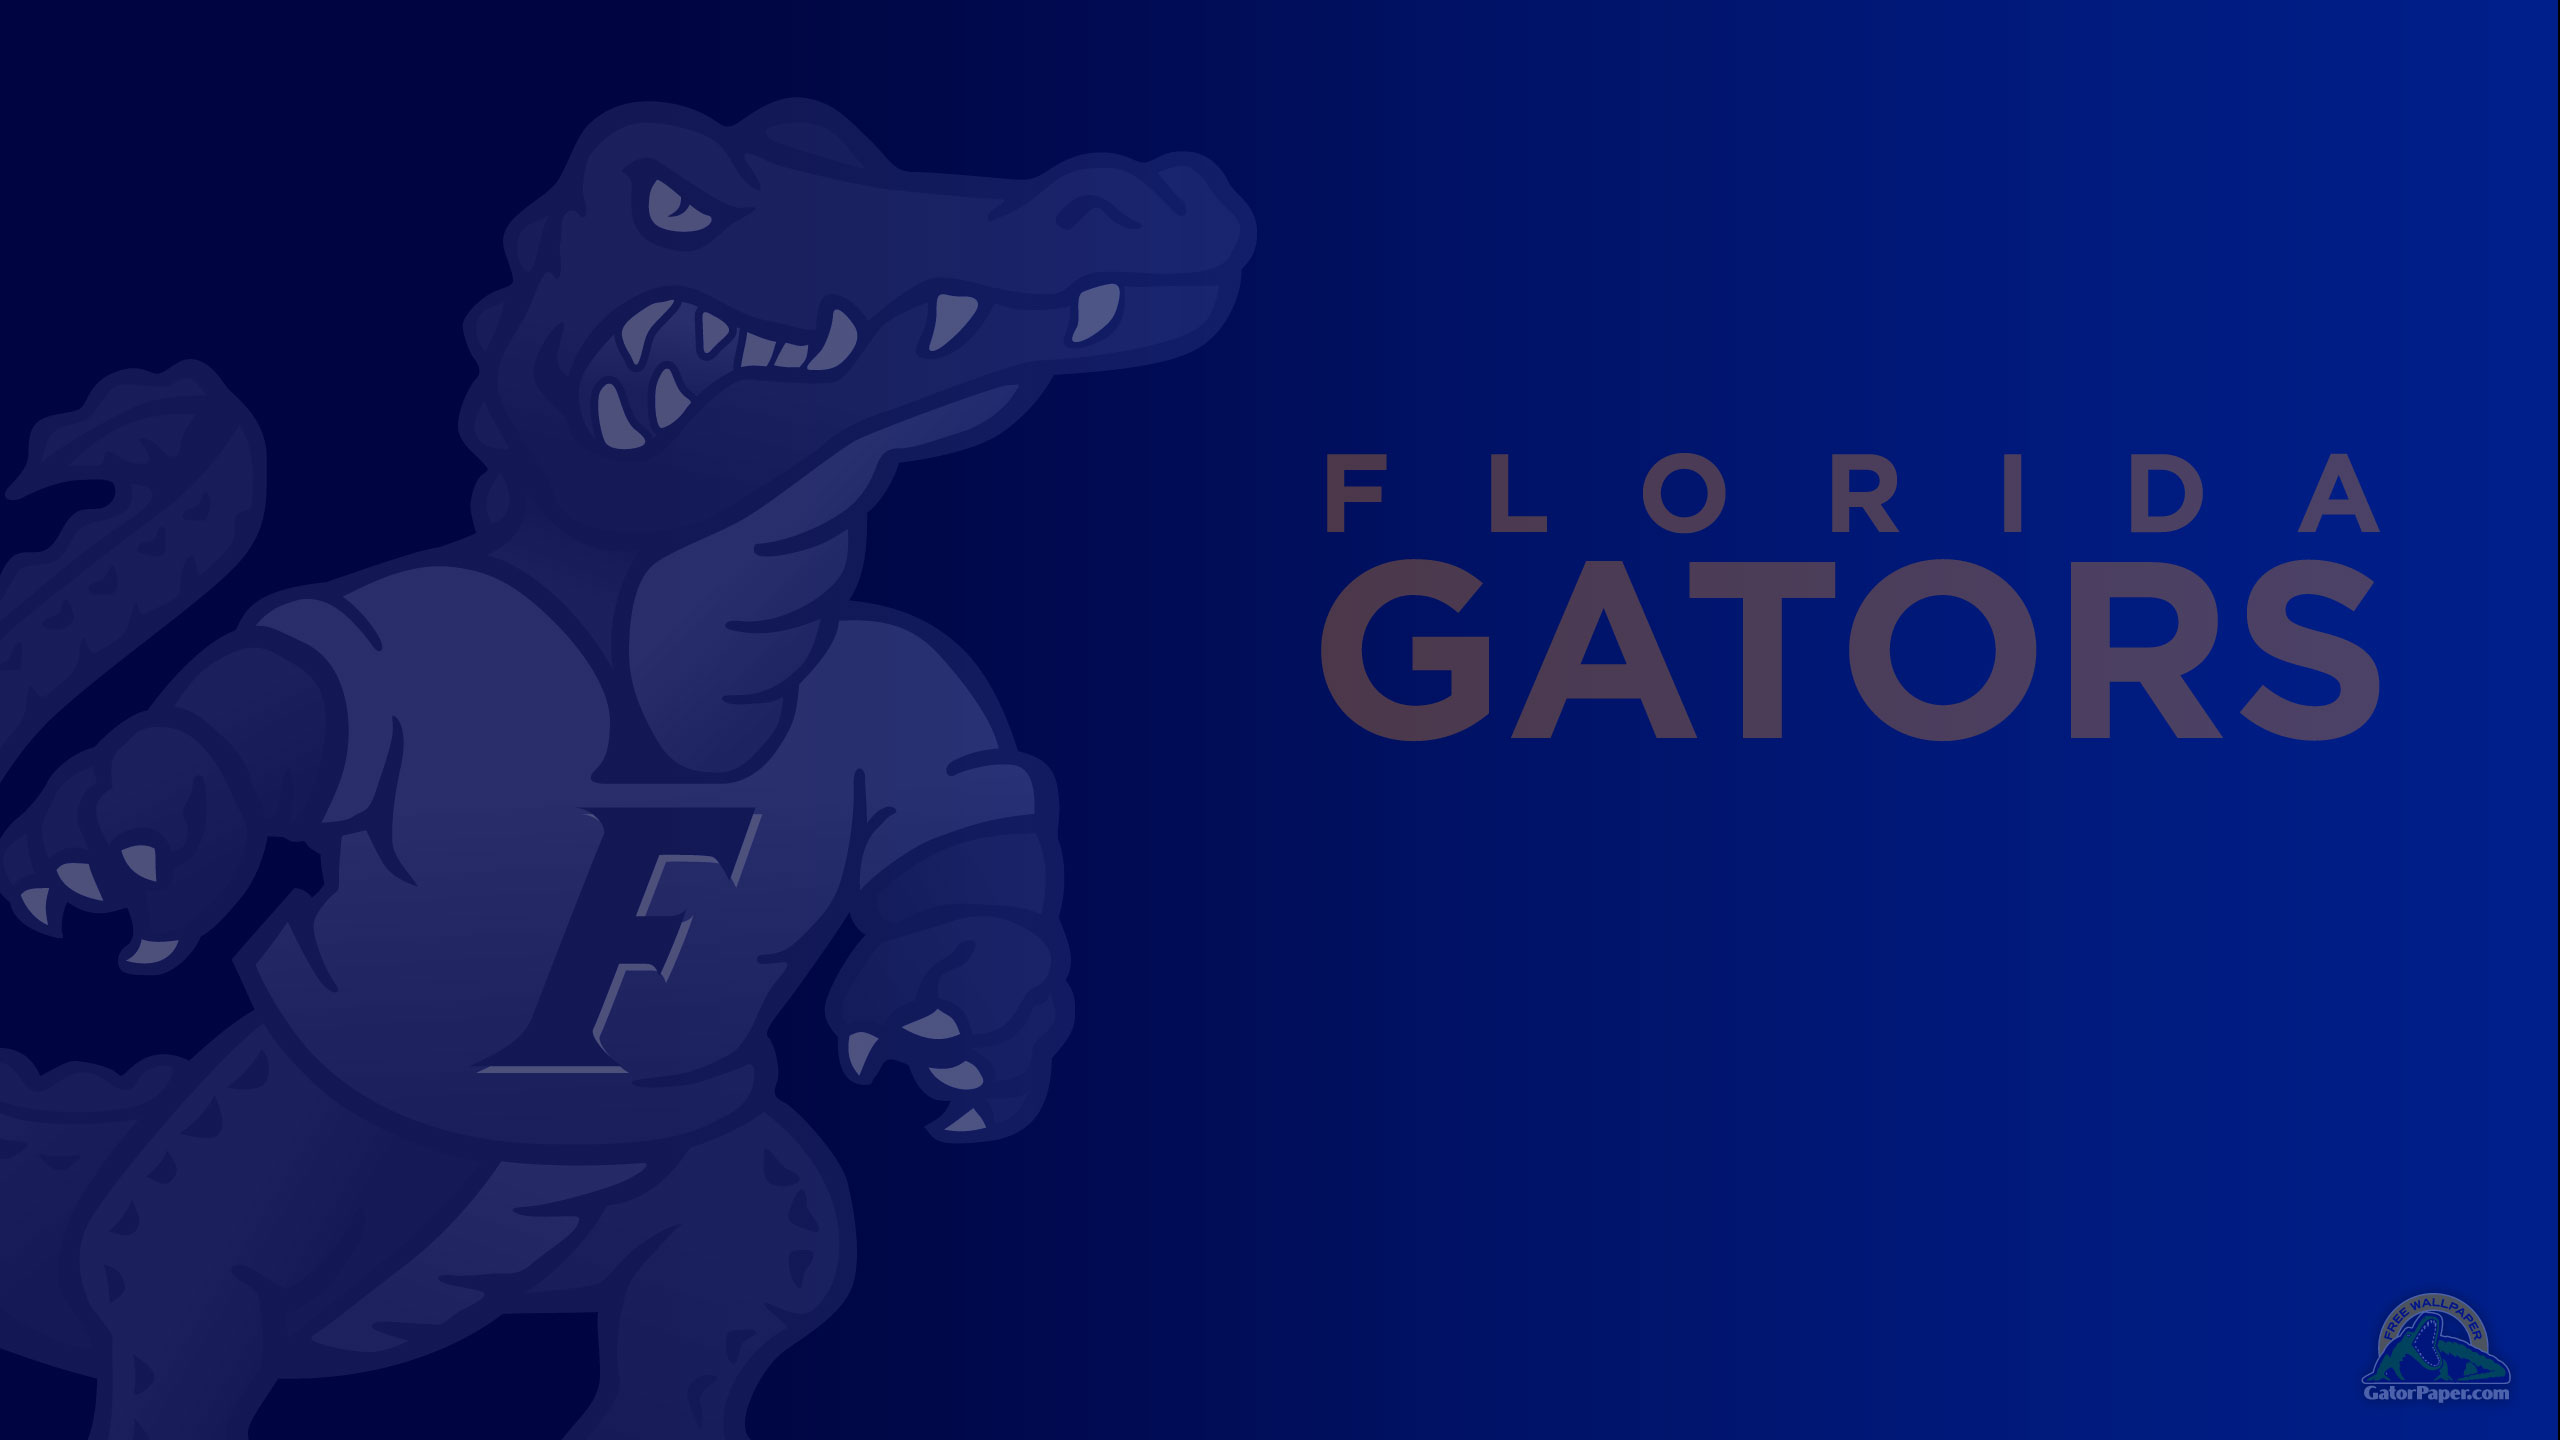 Florida Gators Dark Blue Wallpaper GatorPaper   Free Sports Desktop